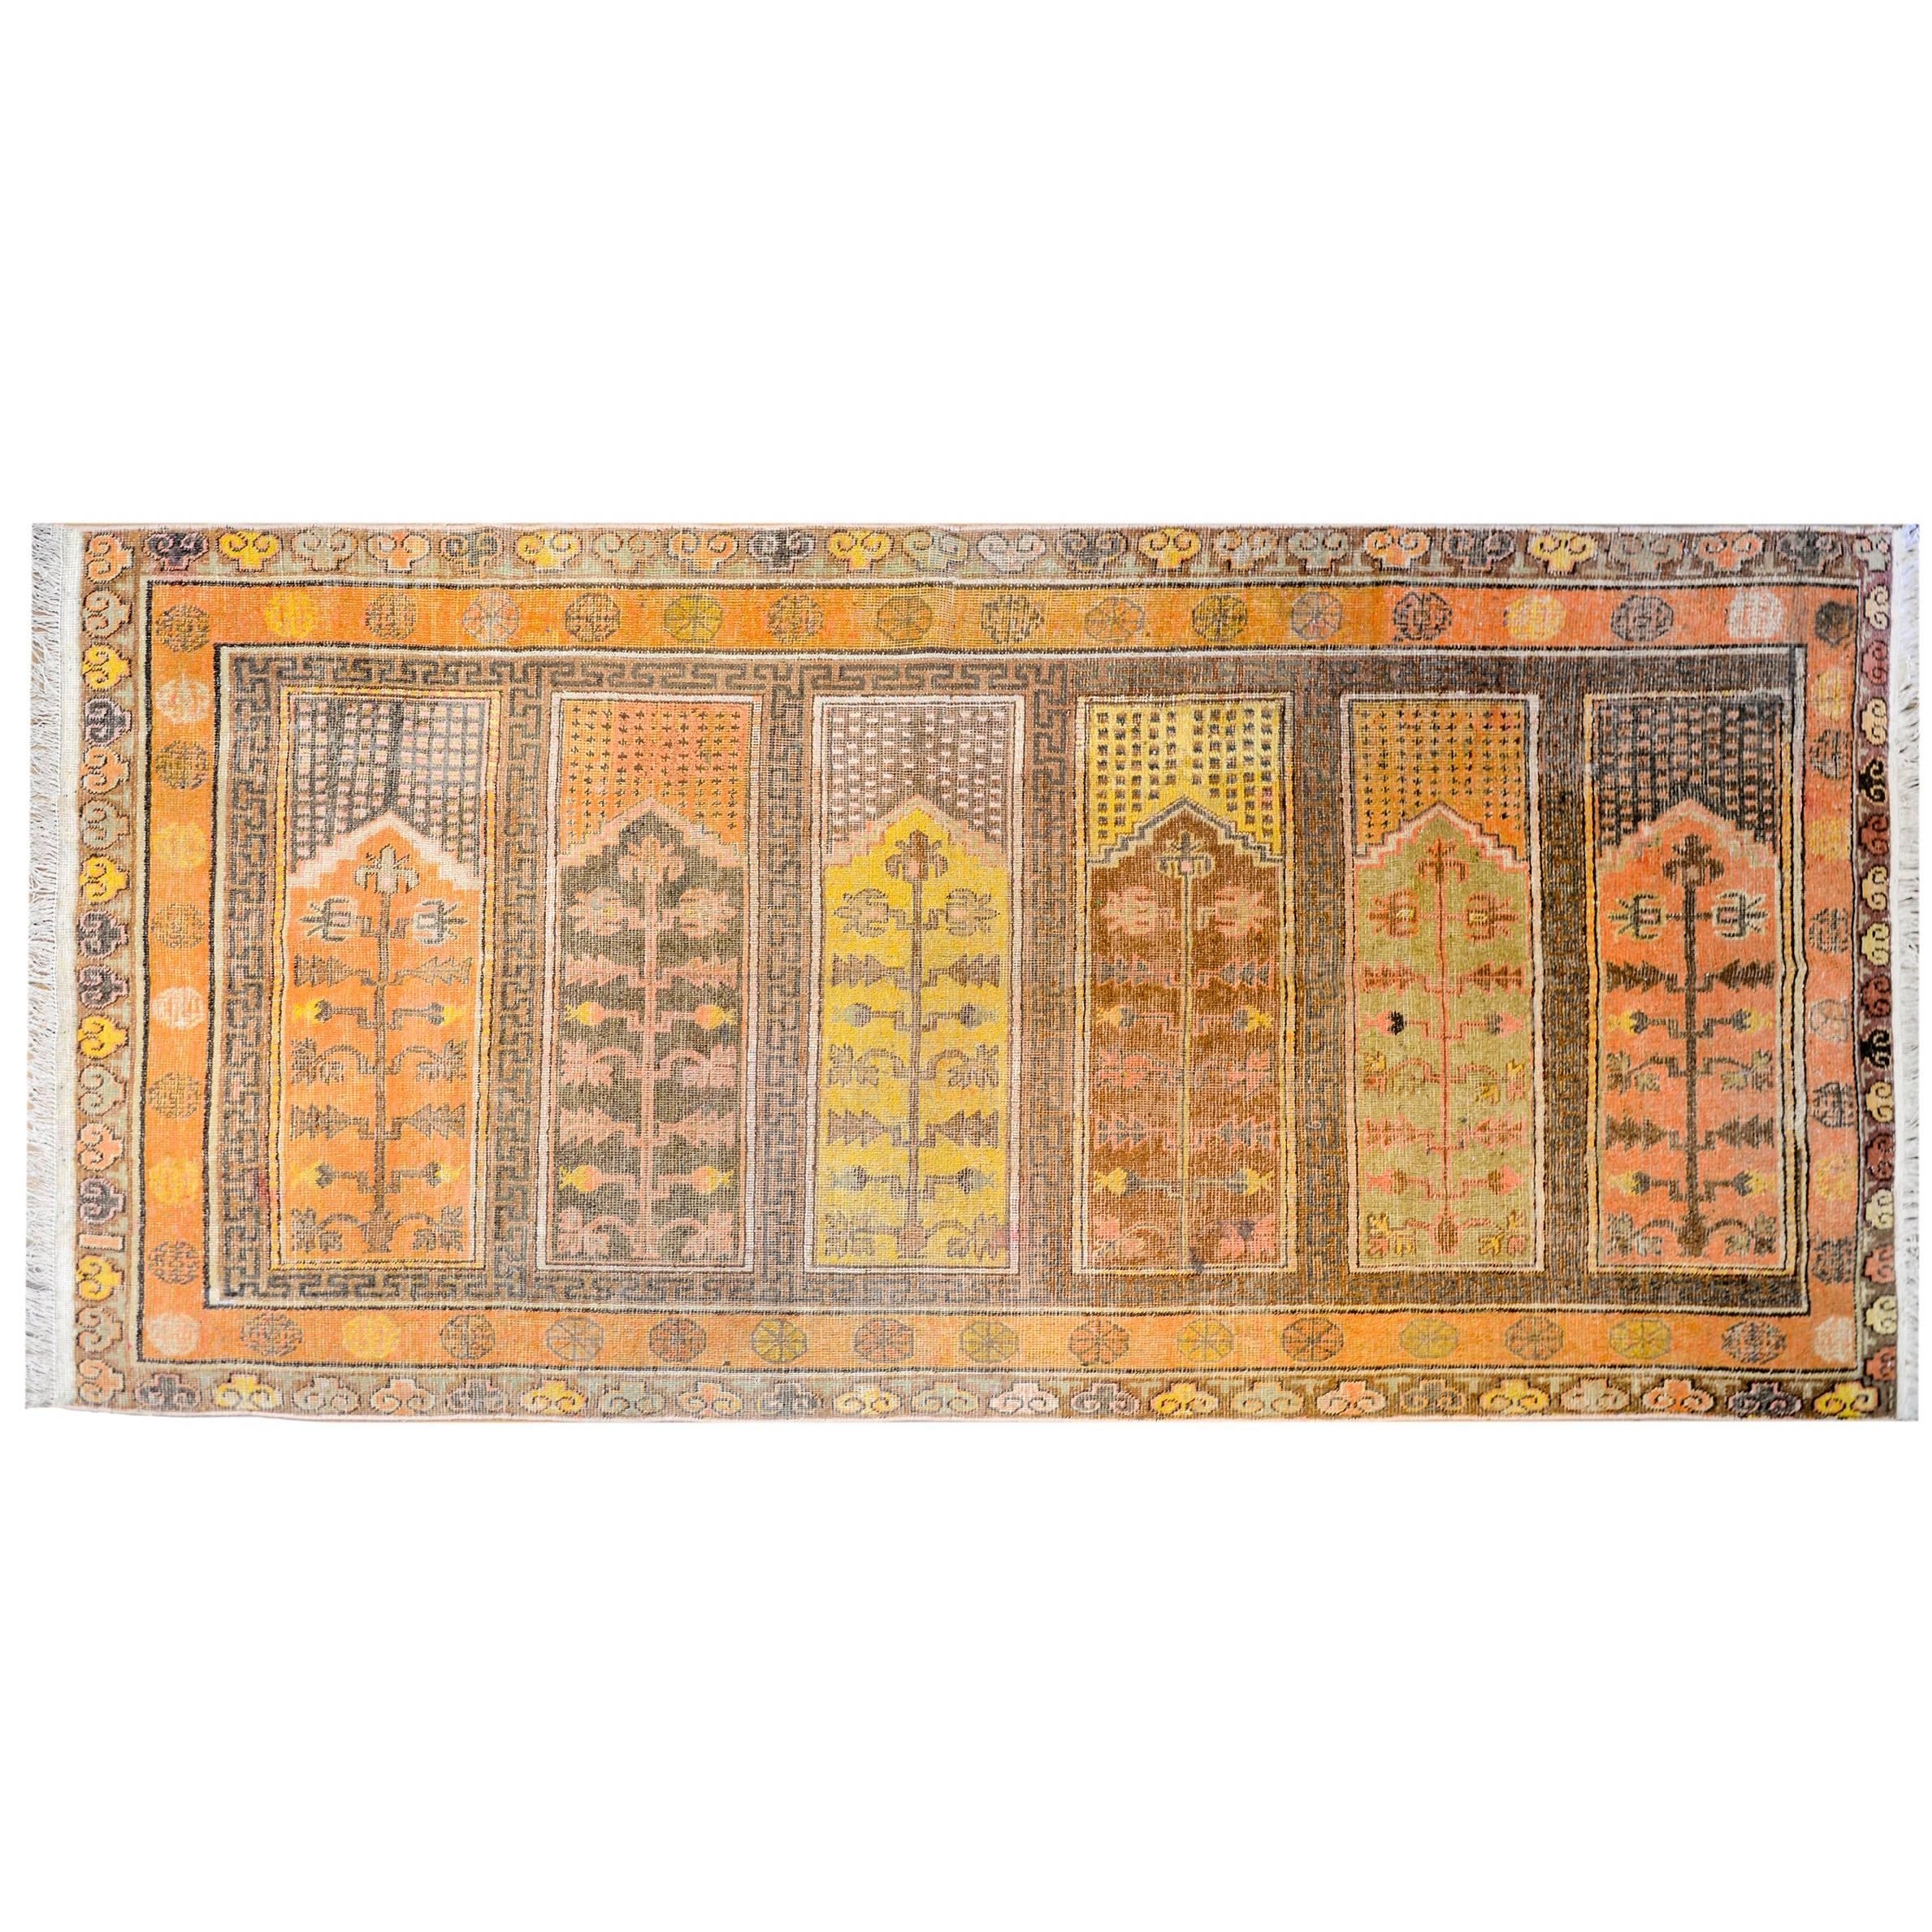 Unique Early 20th Century Khotan Rug